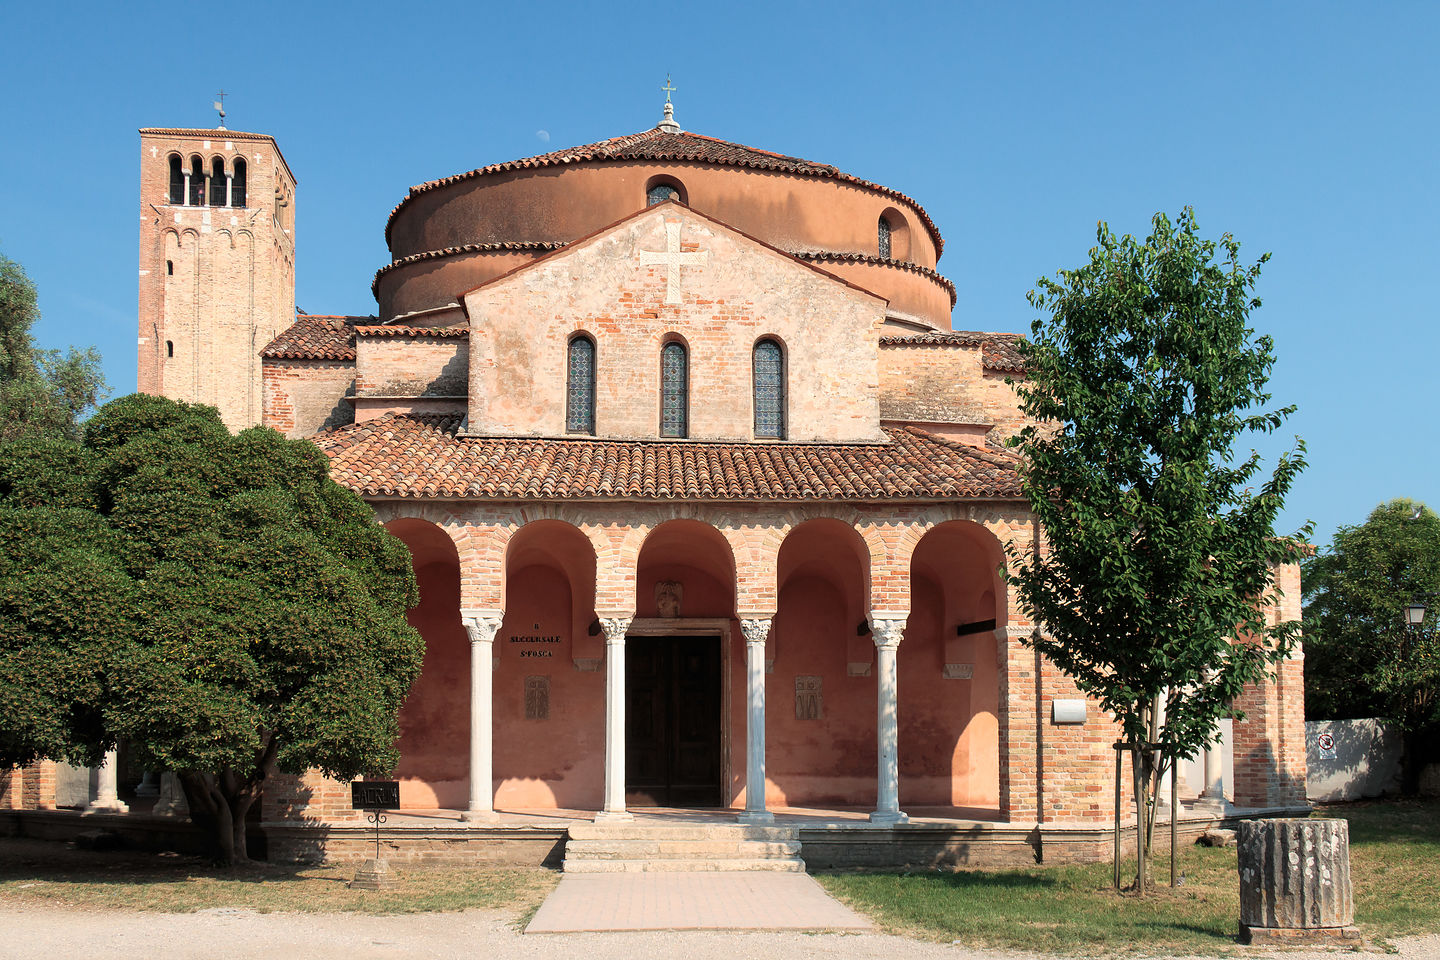 12th century Church of Santa Fosca 